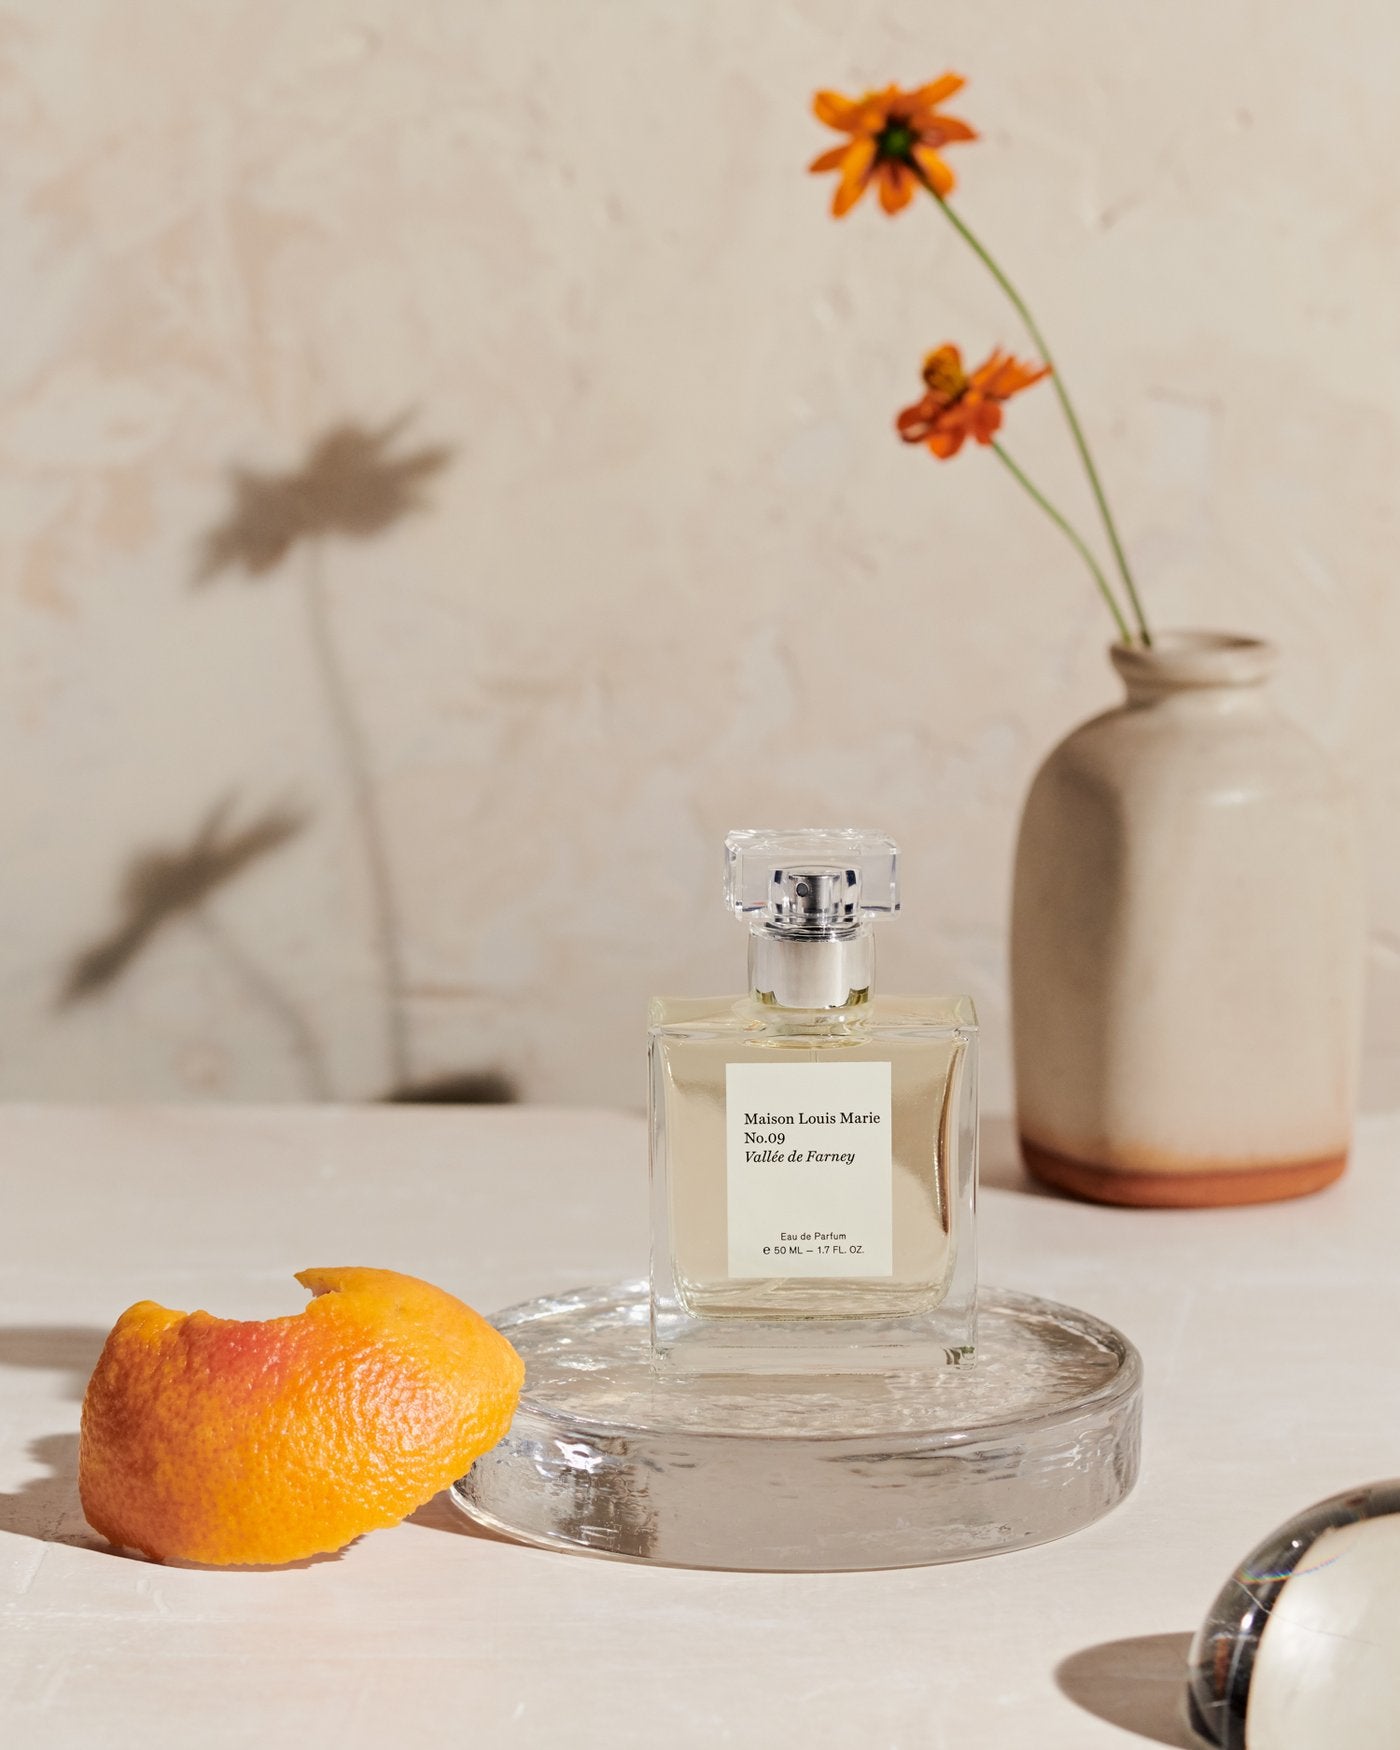 MAISON LOUIS MARIE Antidris Cassis Perfume Oil » buy online